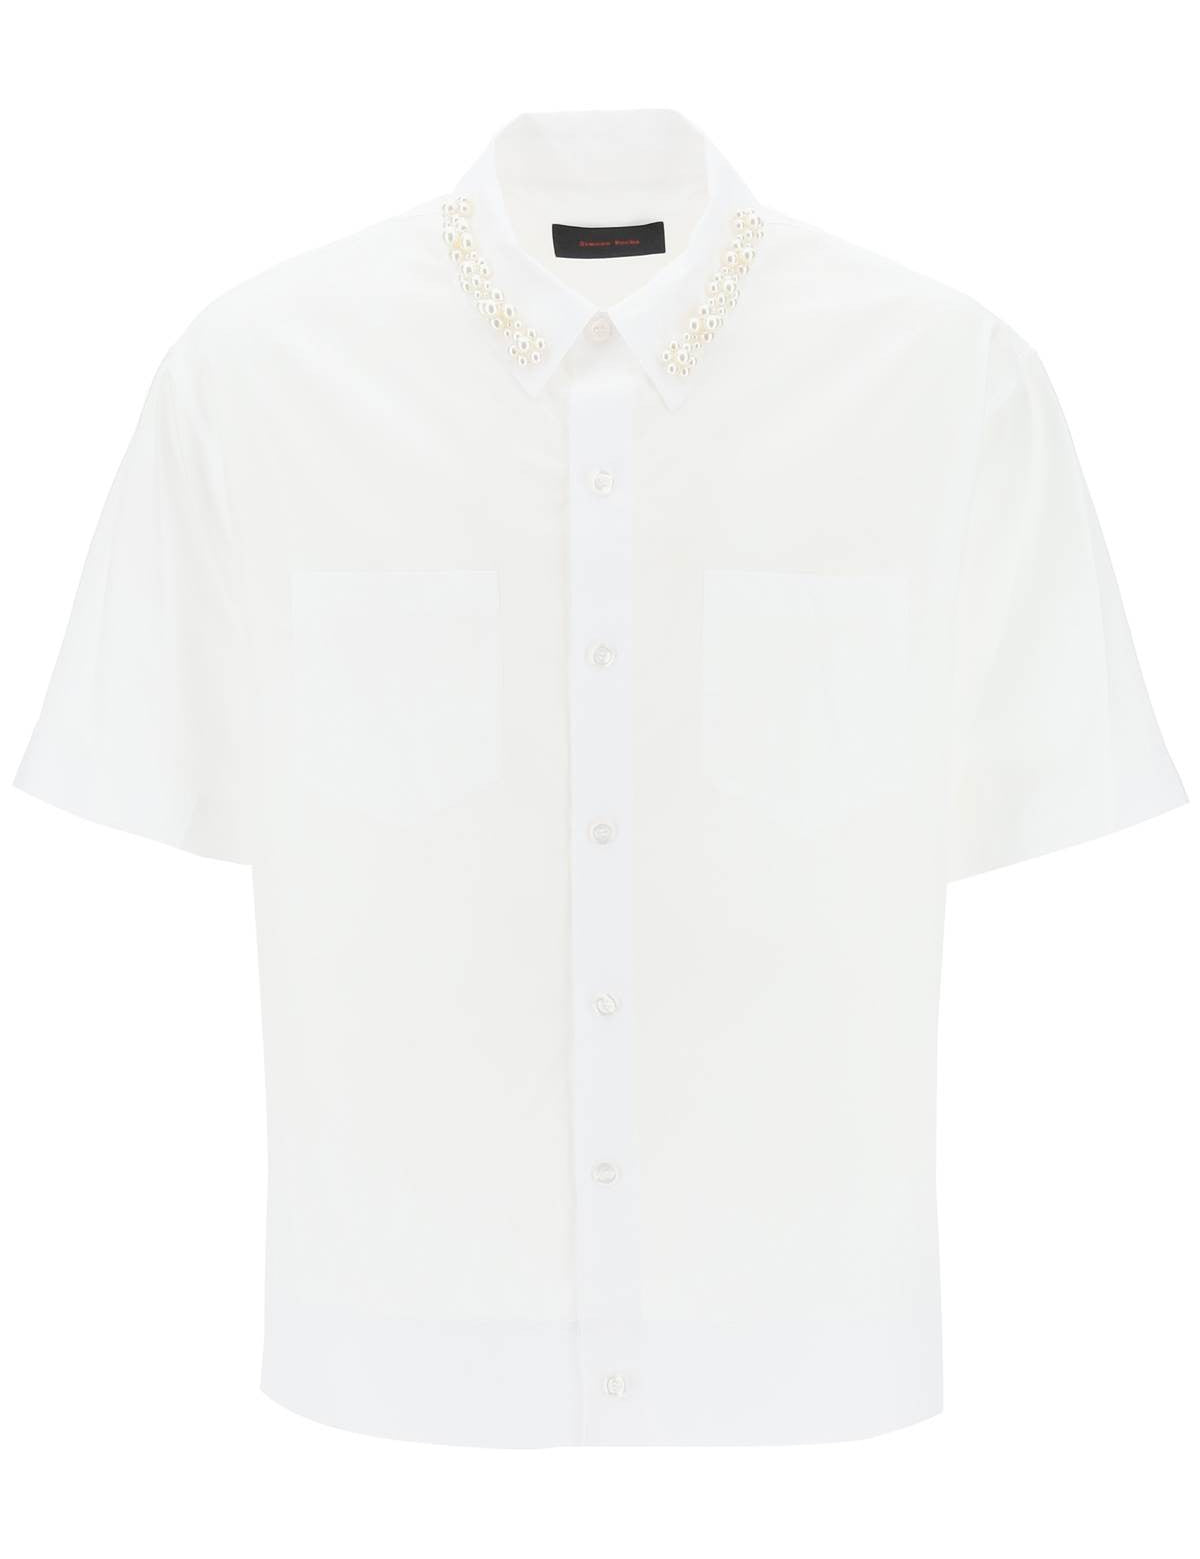 simone-rocha-oversize-shirt-with-pearls.jpg